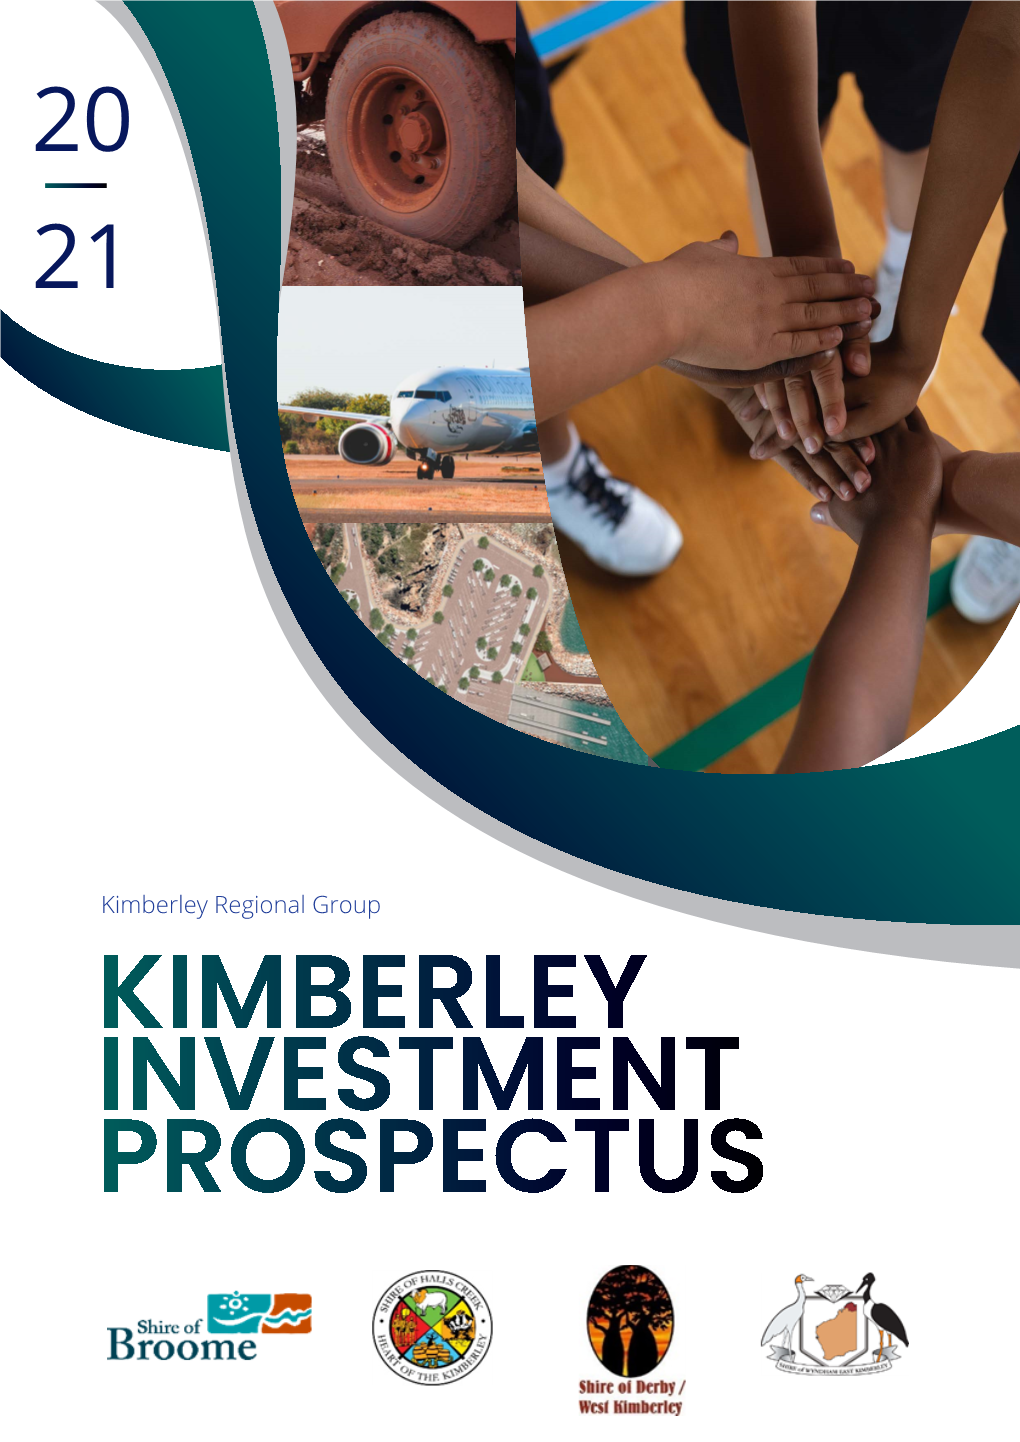 KIMBERLEY INVESTMENT PROSPECTUS Investment Kimberley Regional Group